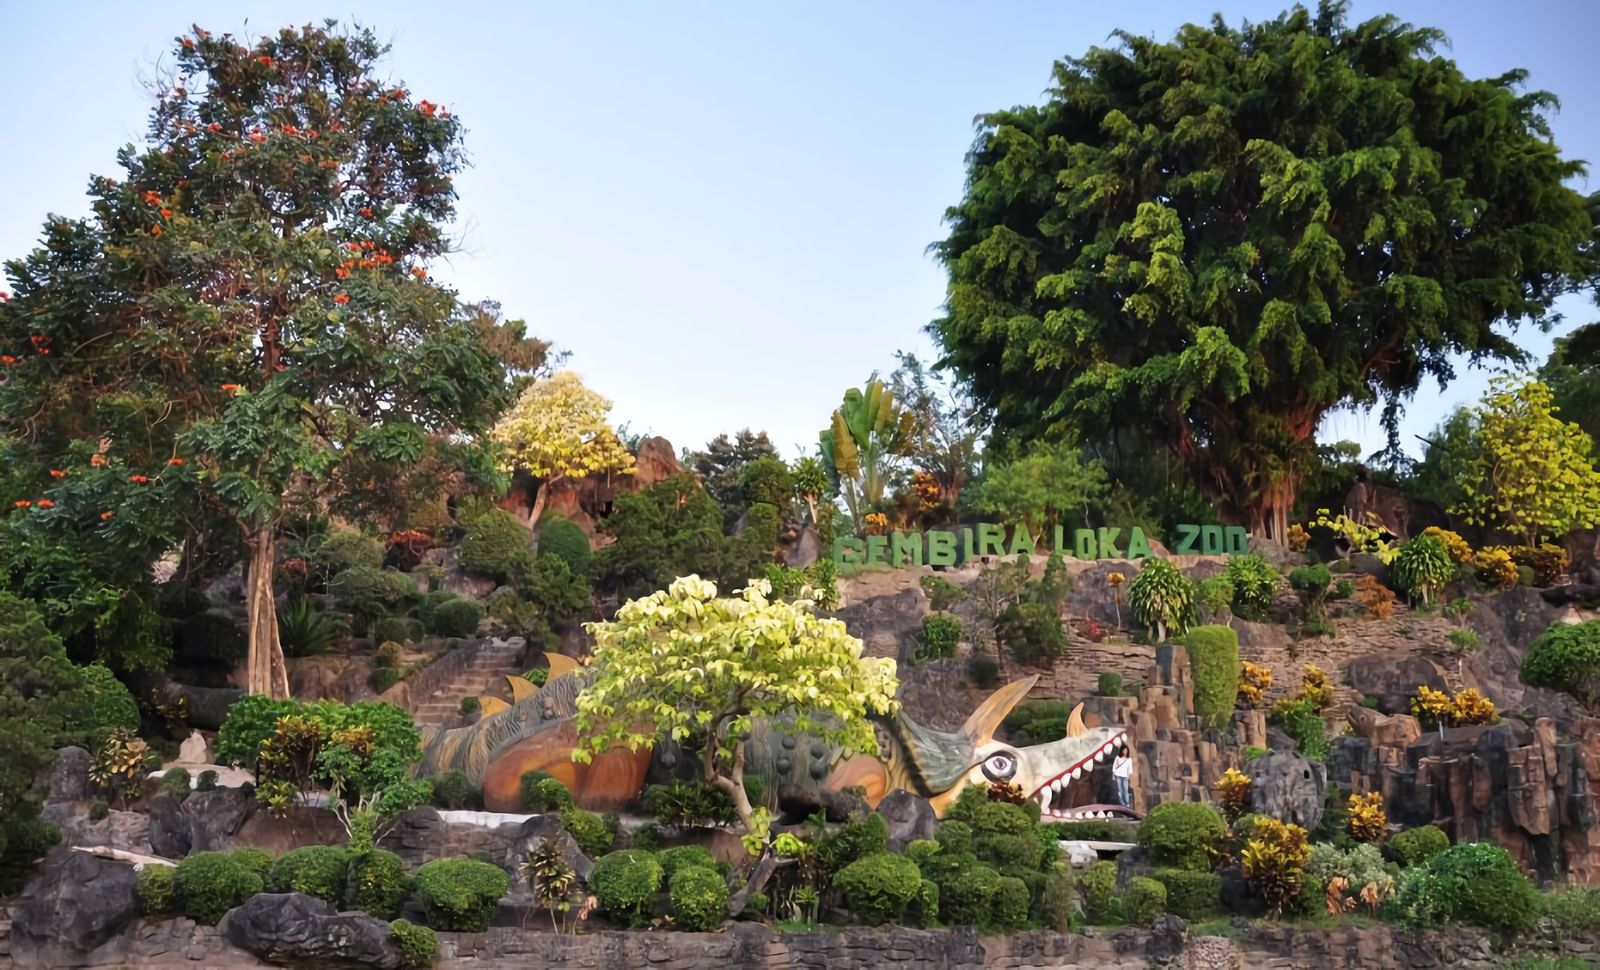 Kebun Binatang Gembira Loka di Yogyakarta | Atourin